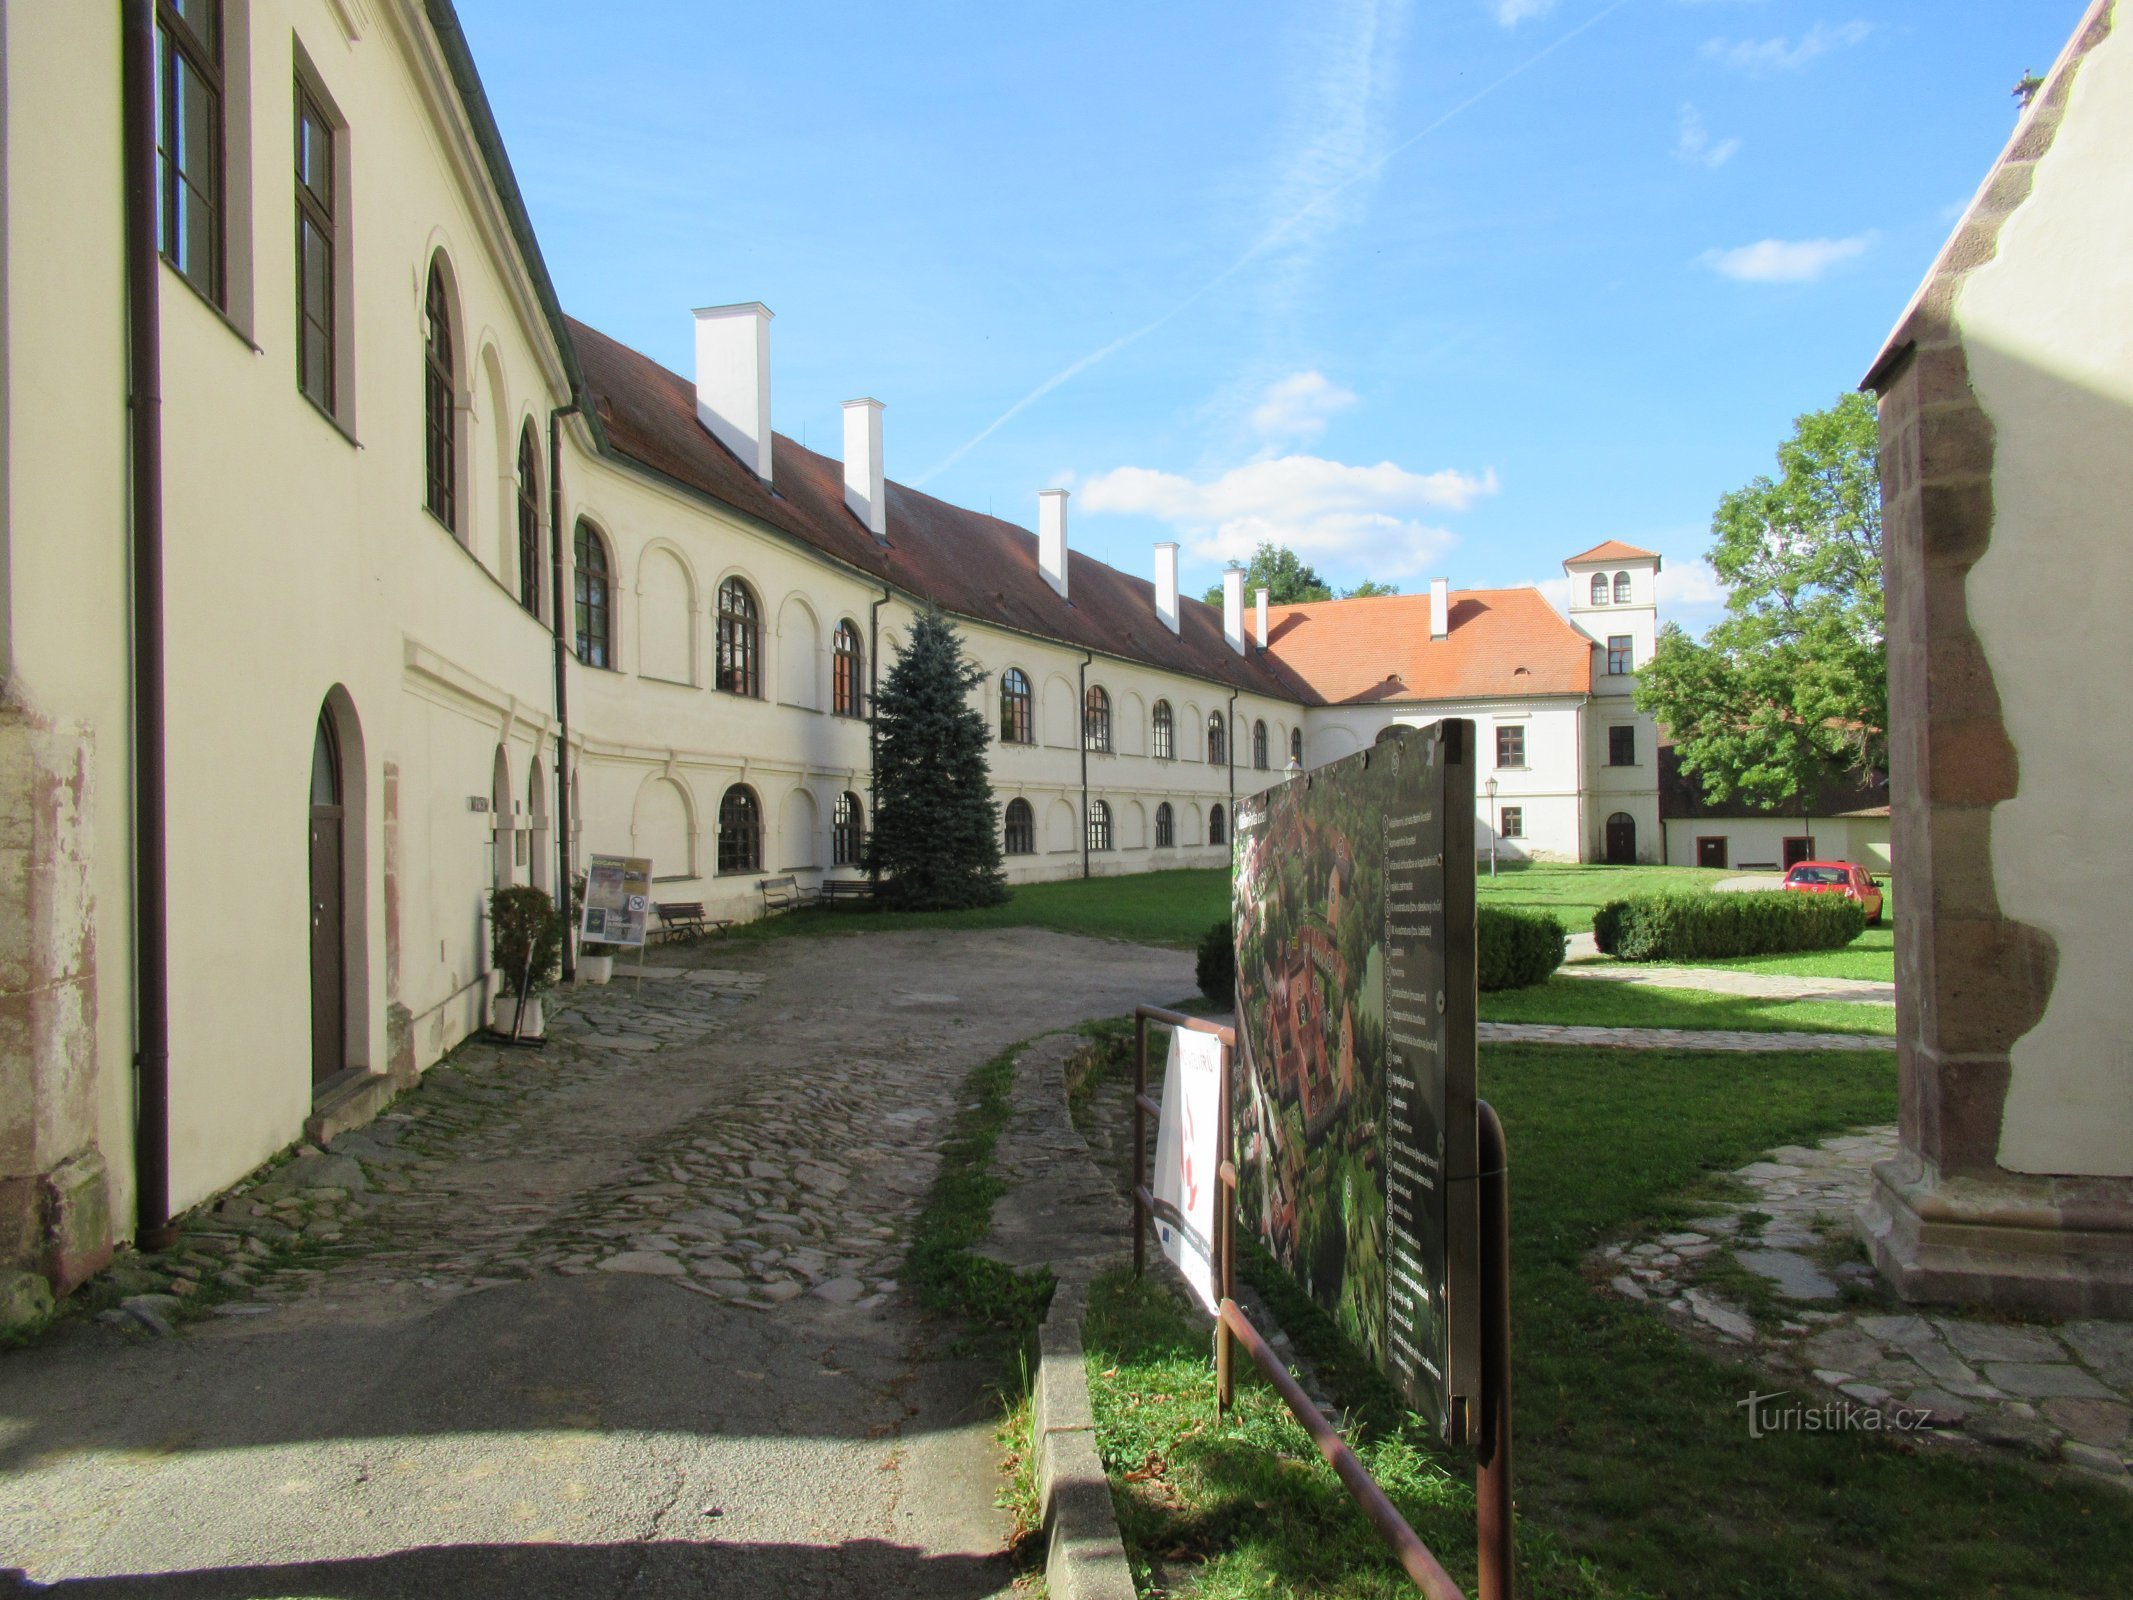 Předklášteří, kylä lähellä Tišnovia